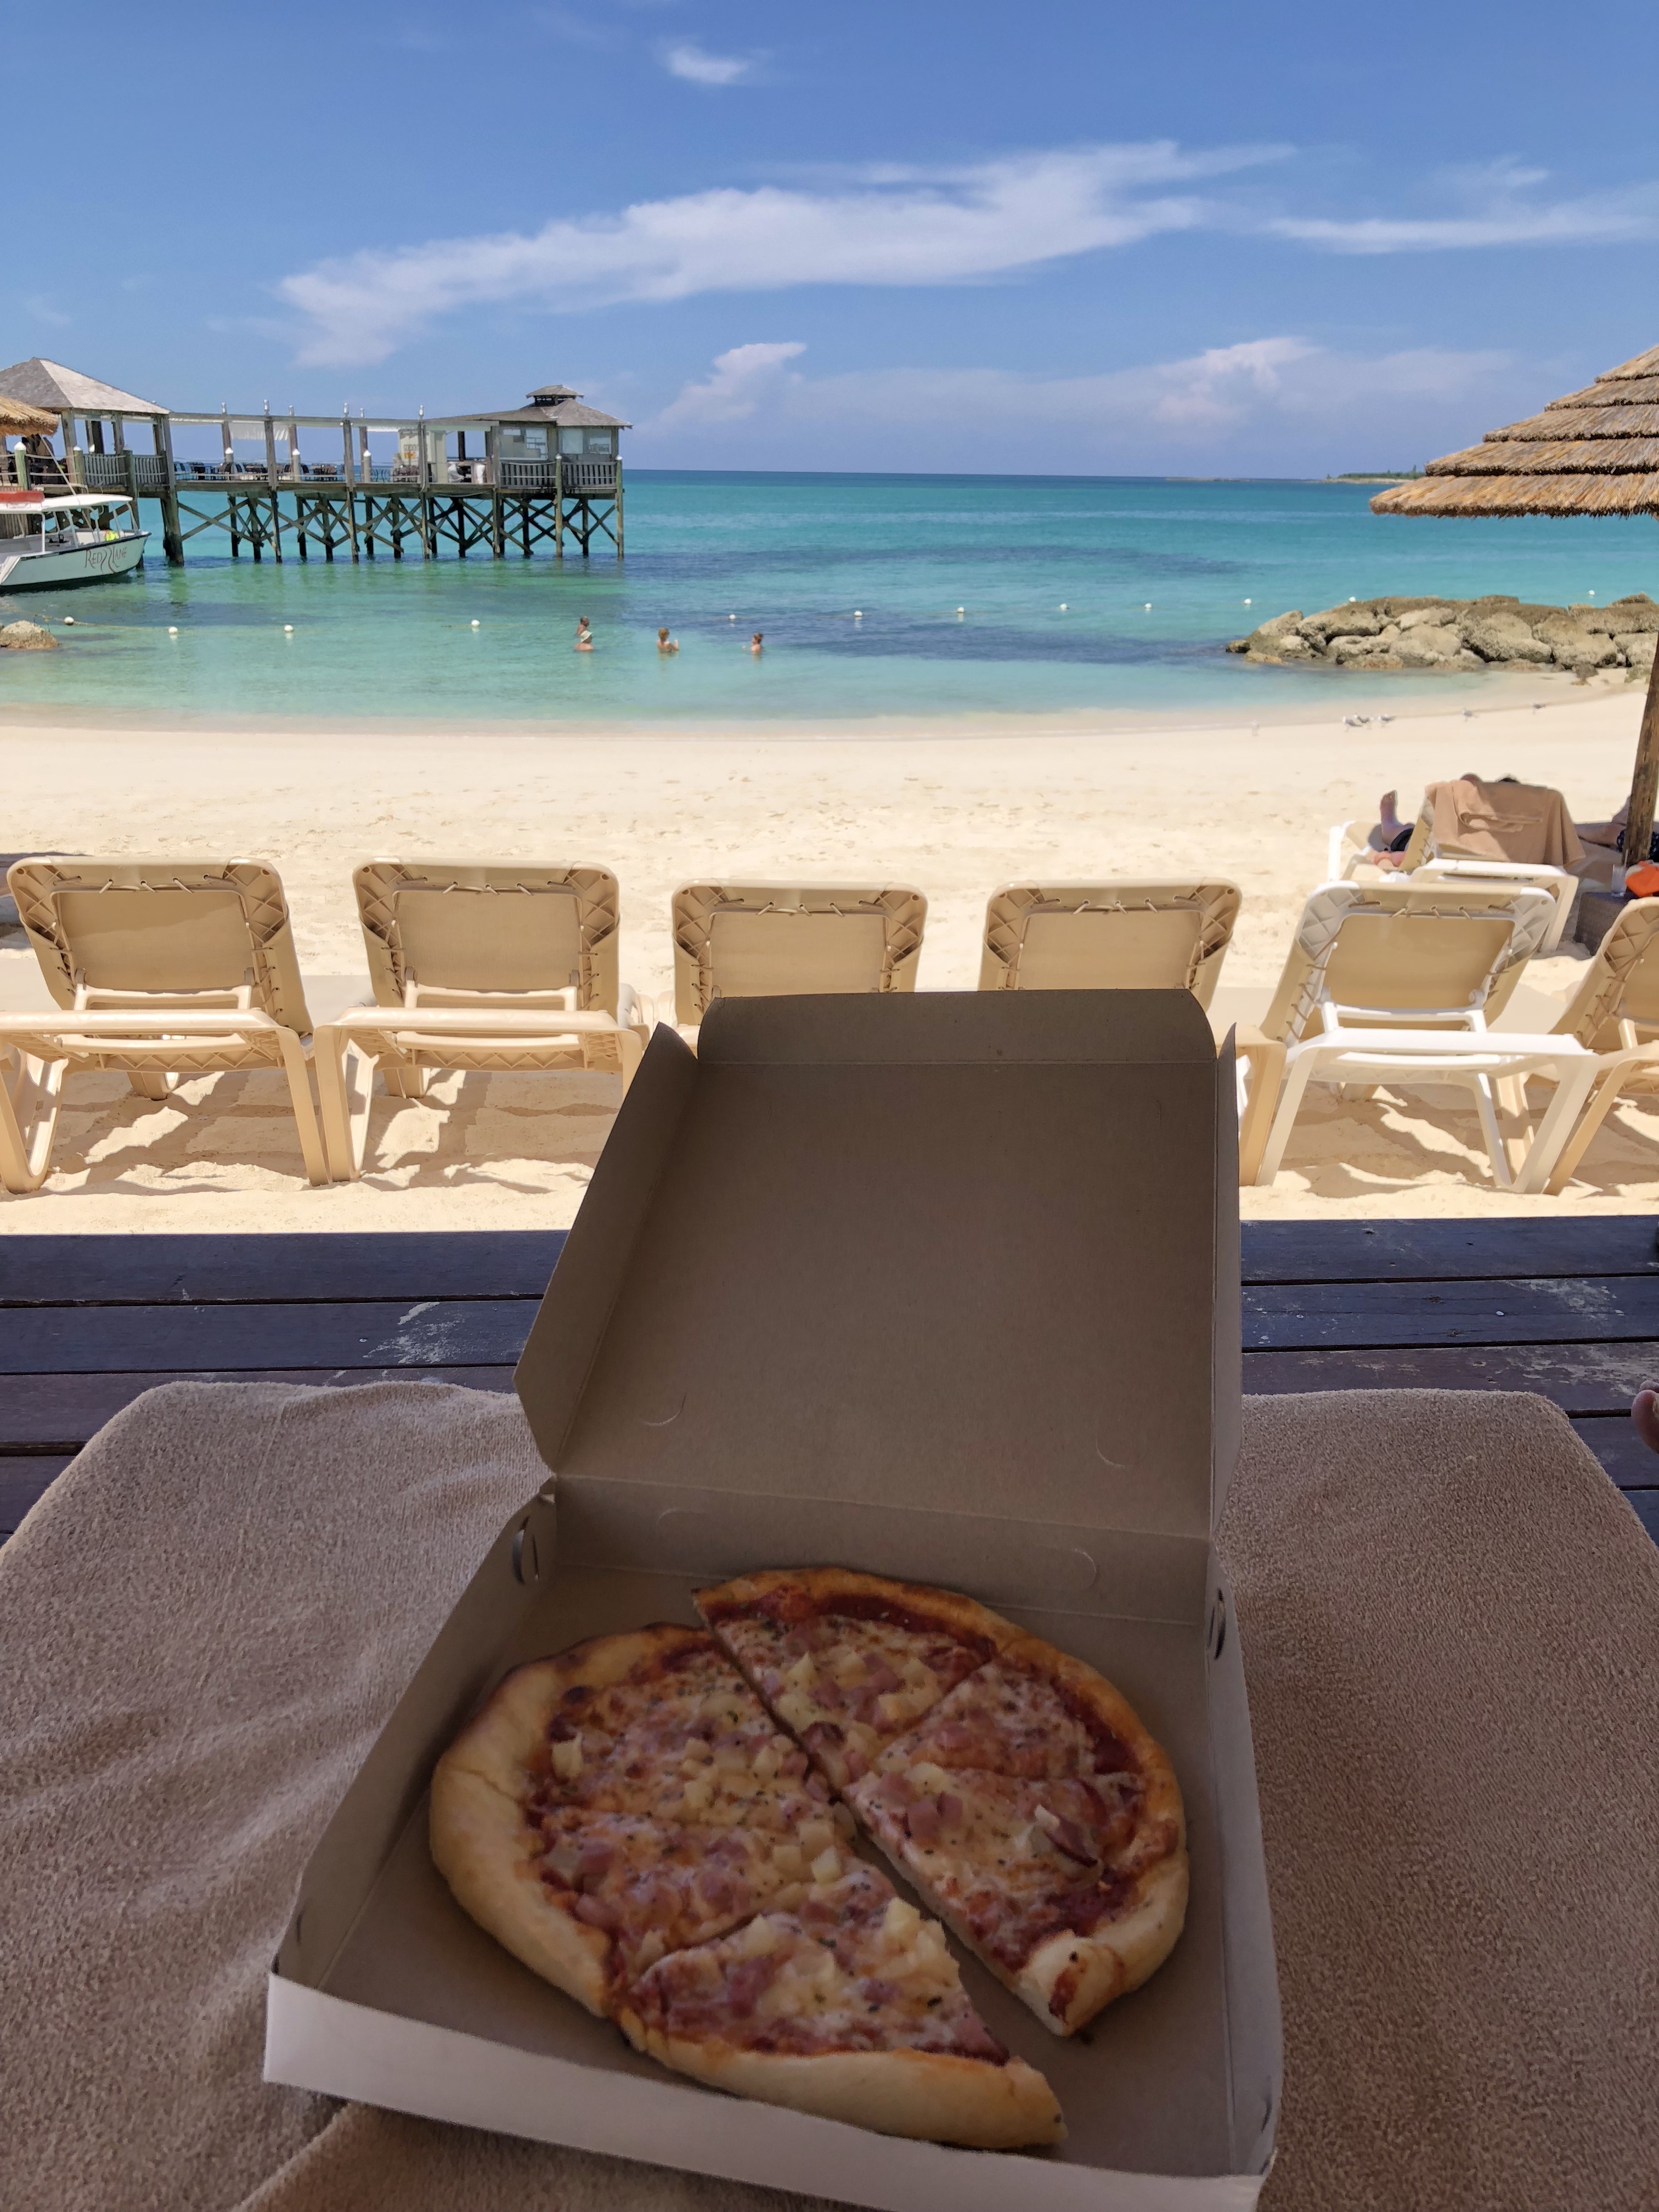 My fav lunch spot, Sandals Royal Bahamian